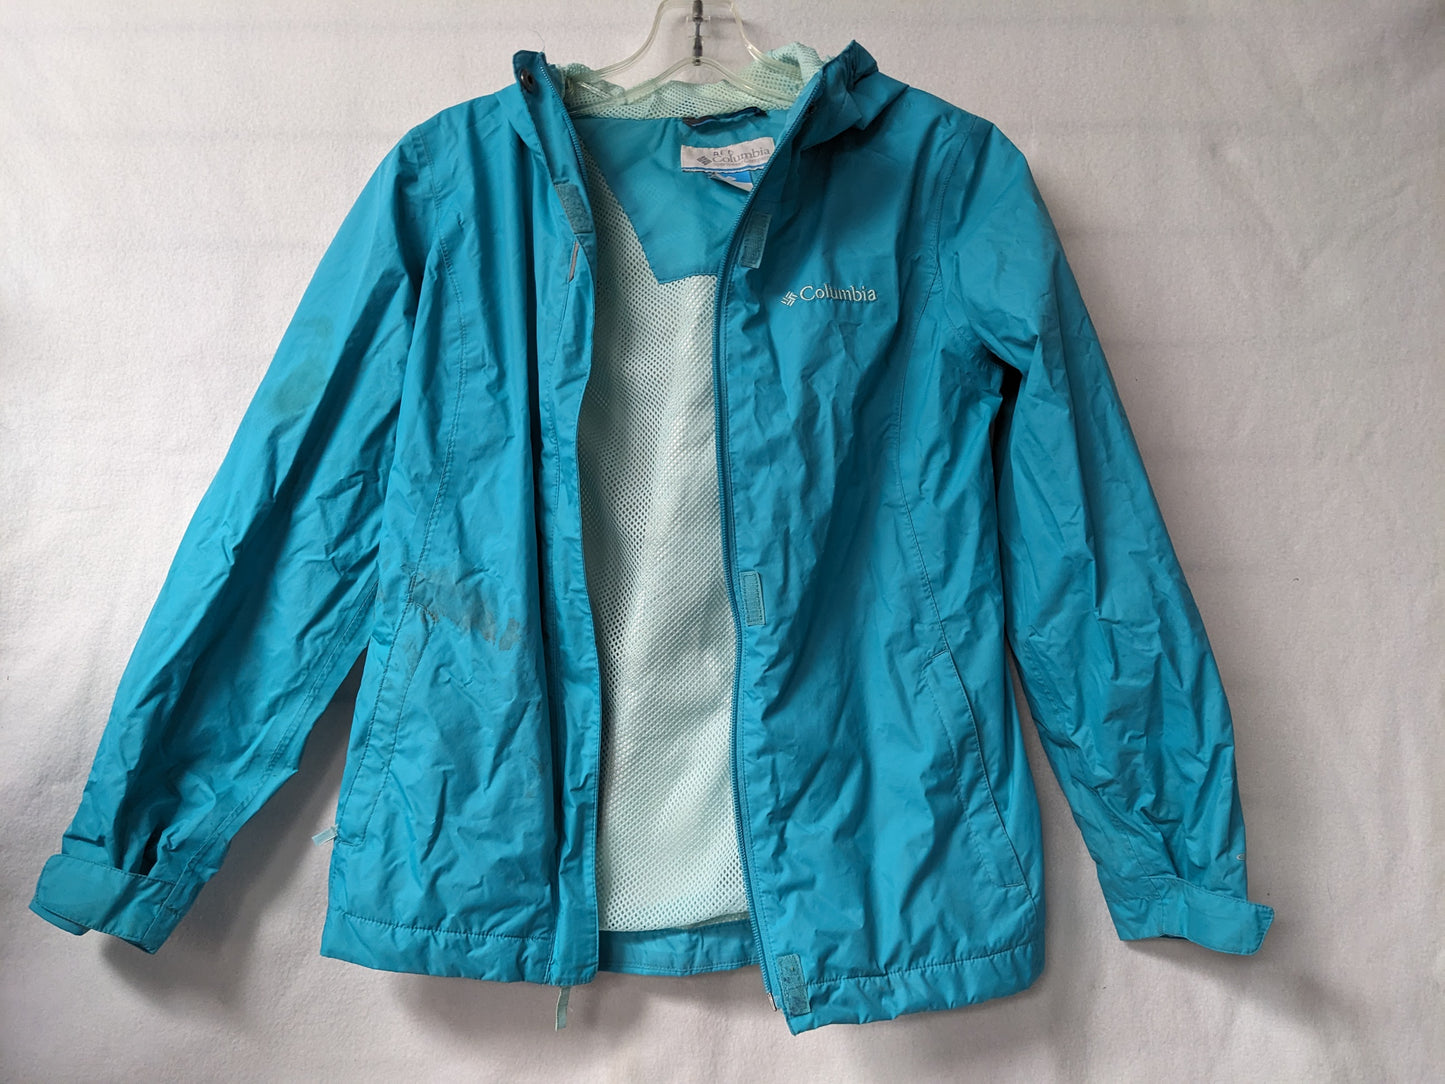 Columbia Hooded Youth Windbreaker/Rain Jacket/Coat Size Youth Medium Color Blue Condition Used